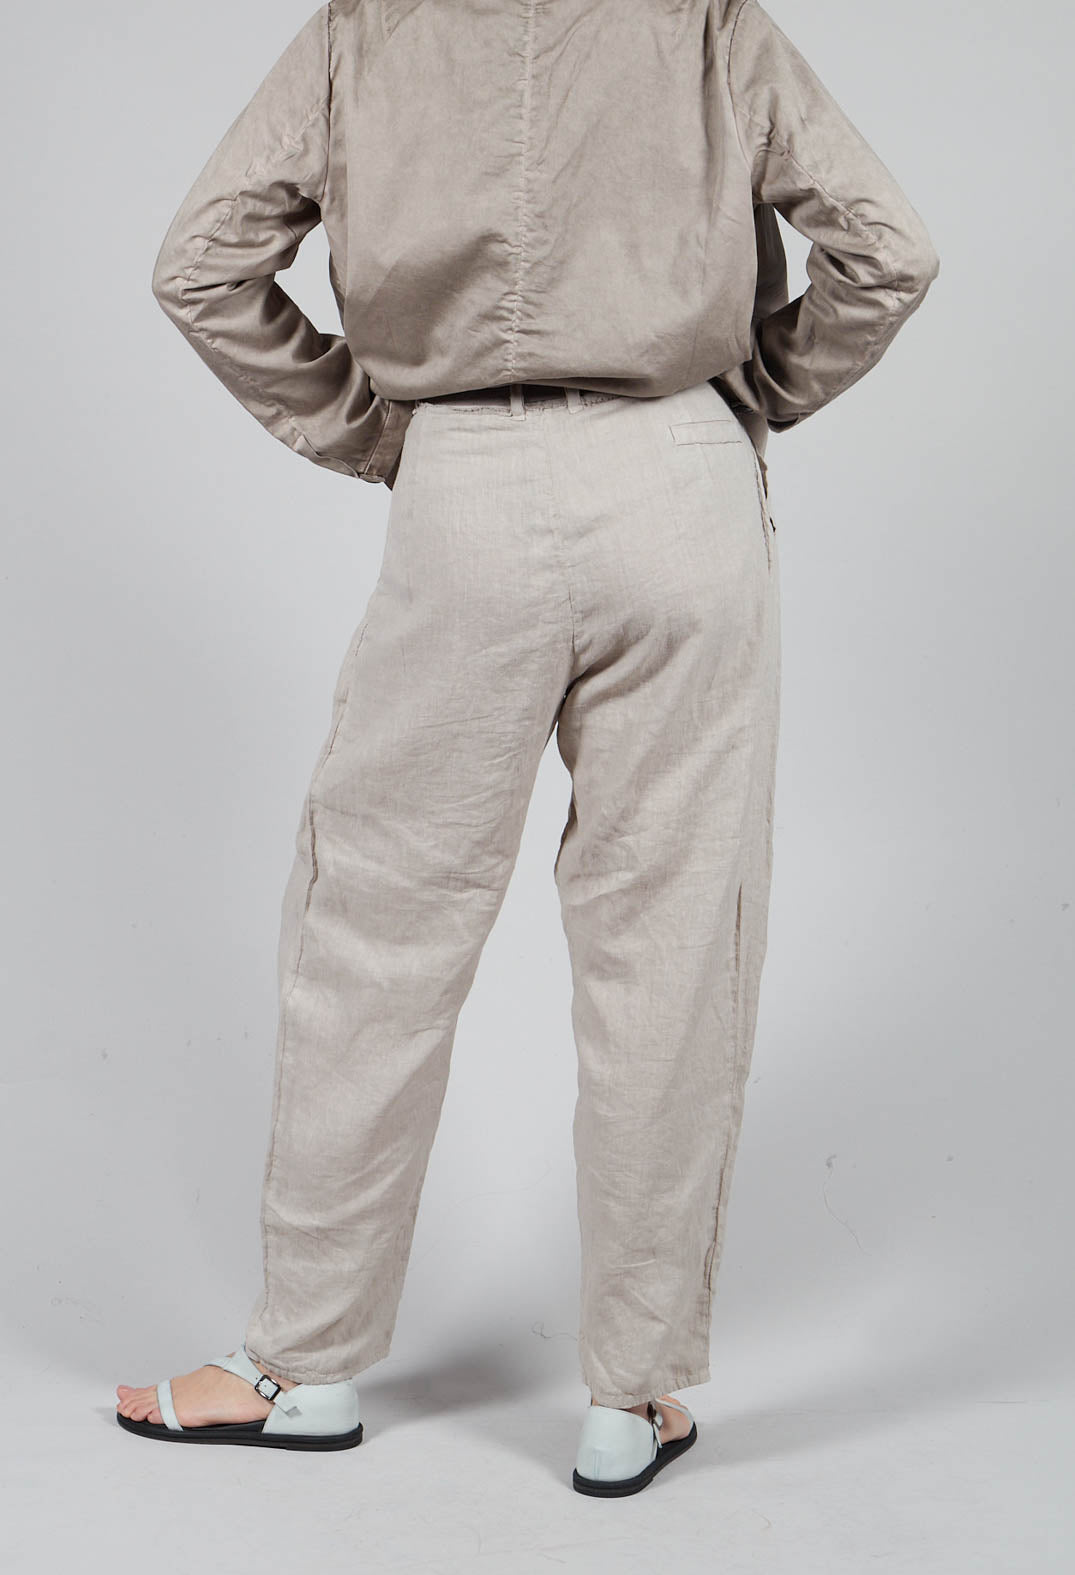 Vintage Look Linen Trousers in Original Beige